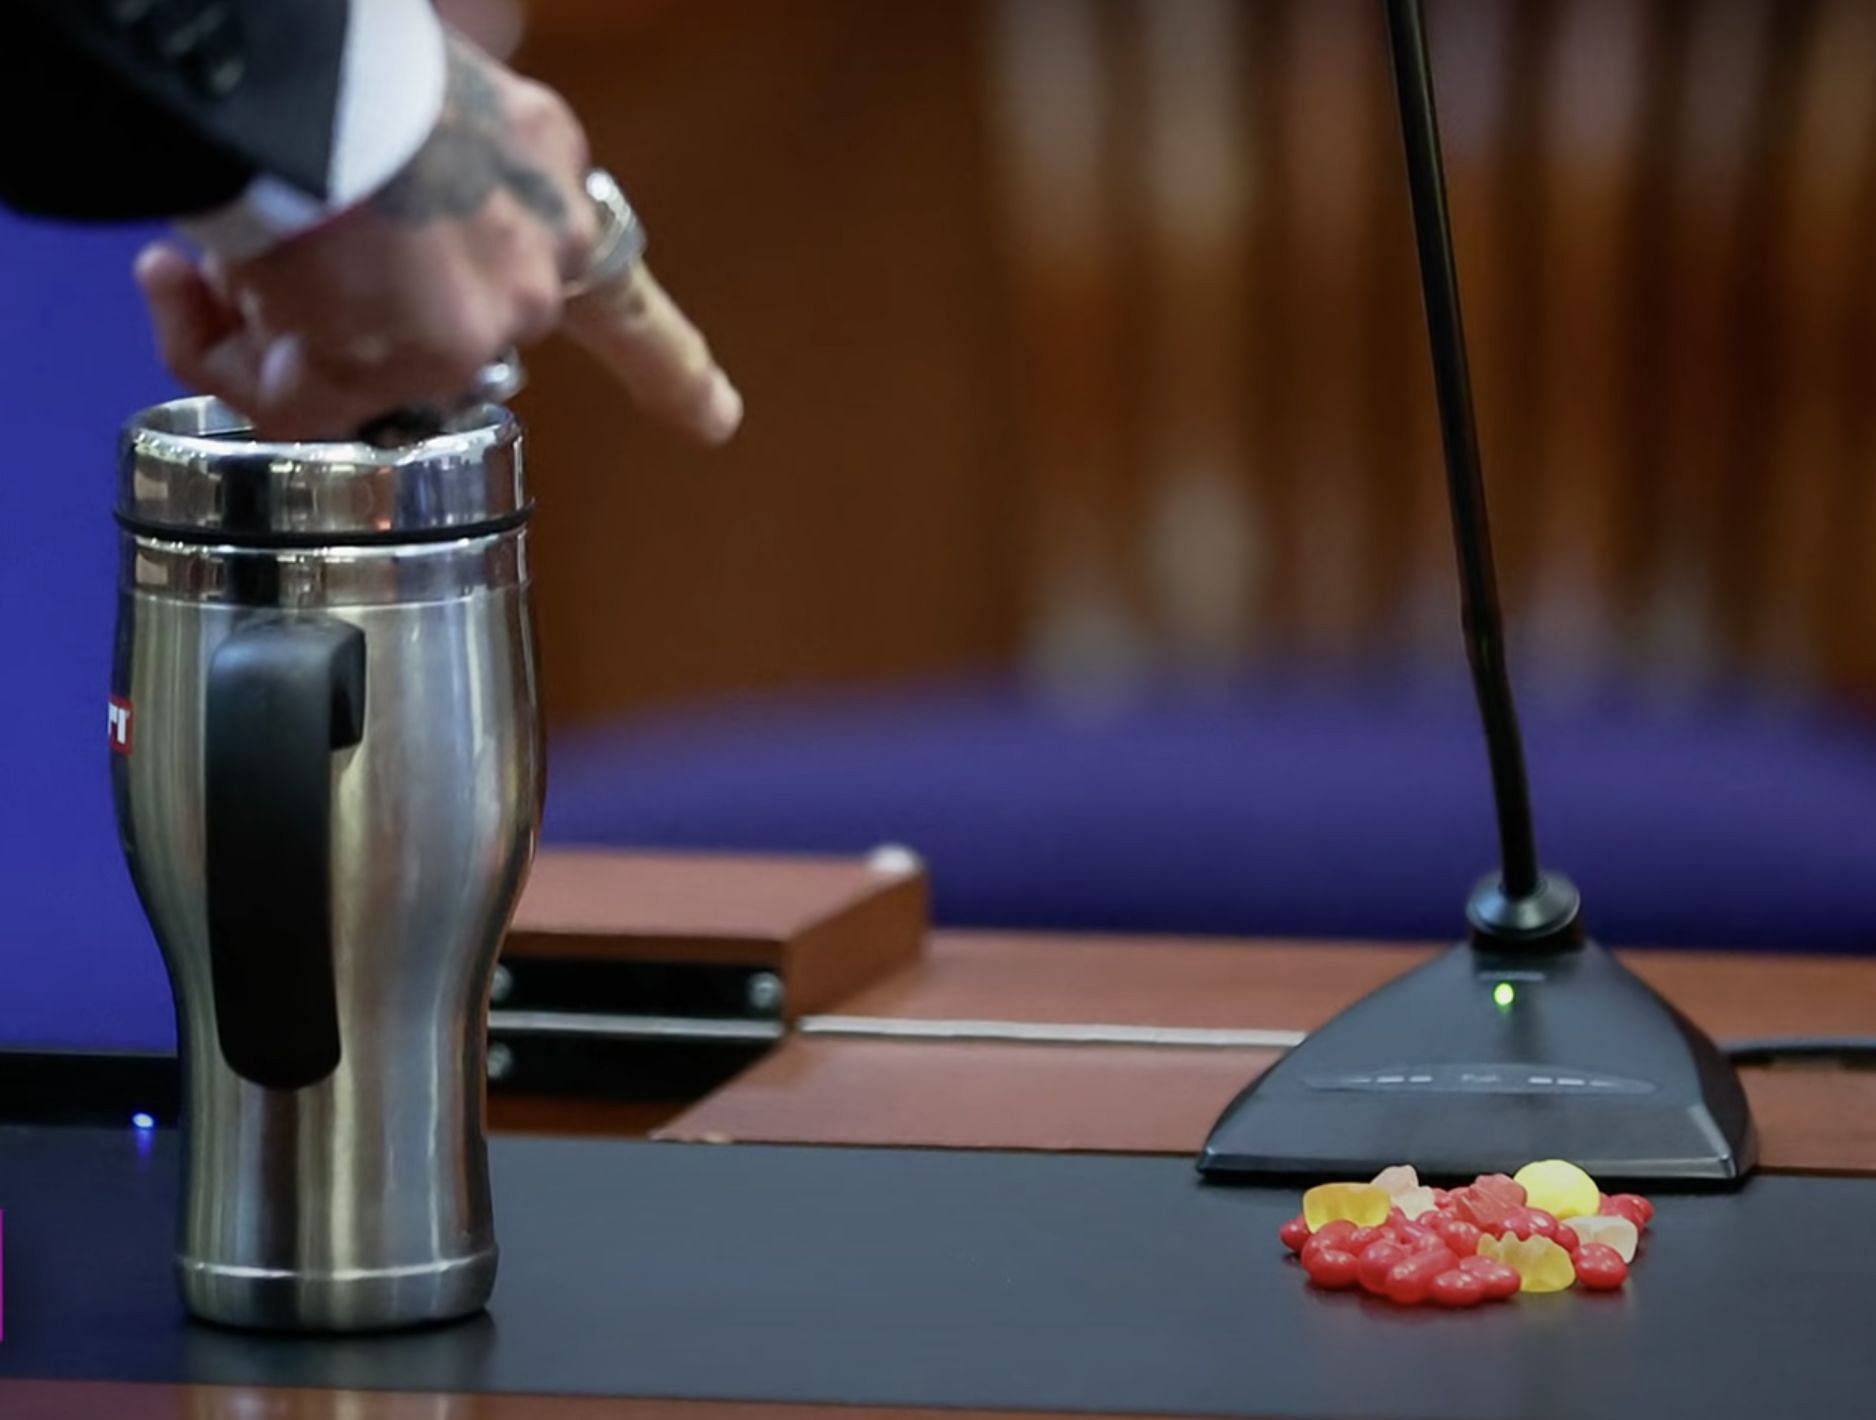 Johnny Depp brings Gummy Bears to courtroom (image via Twitter)